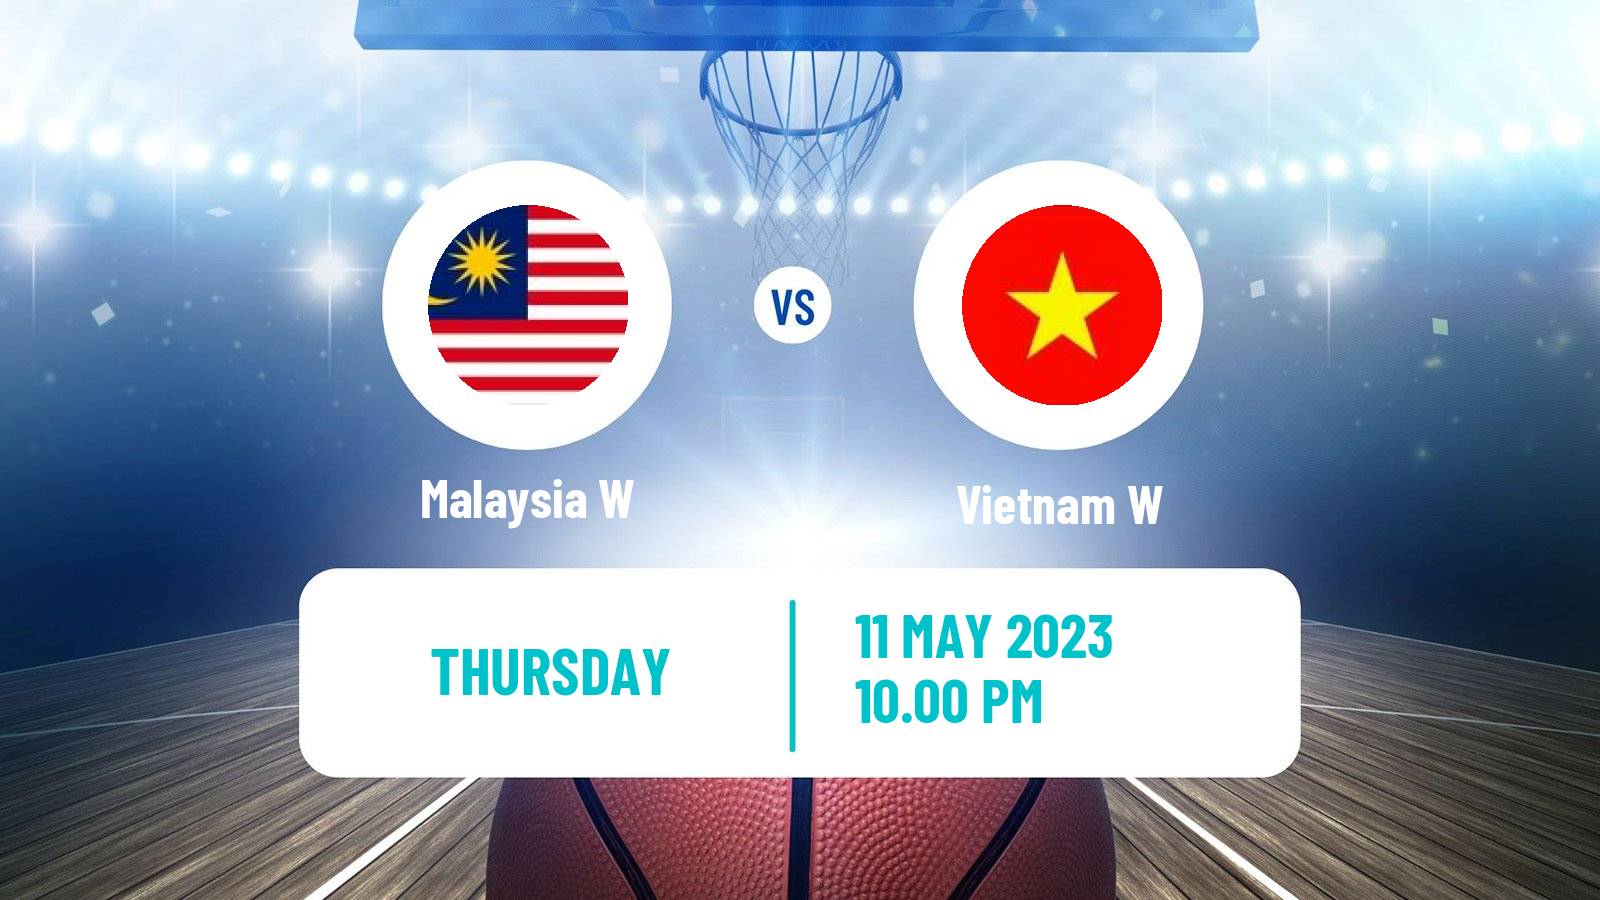 Basketball Southeast Asian Games Basketball Women Malaysia W - Vietnam W